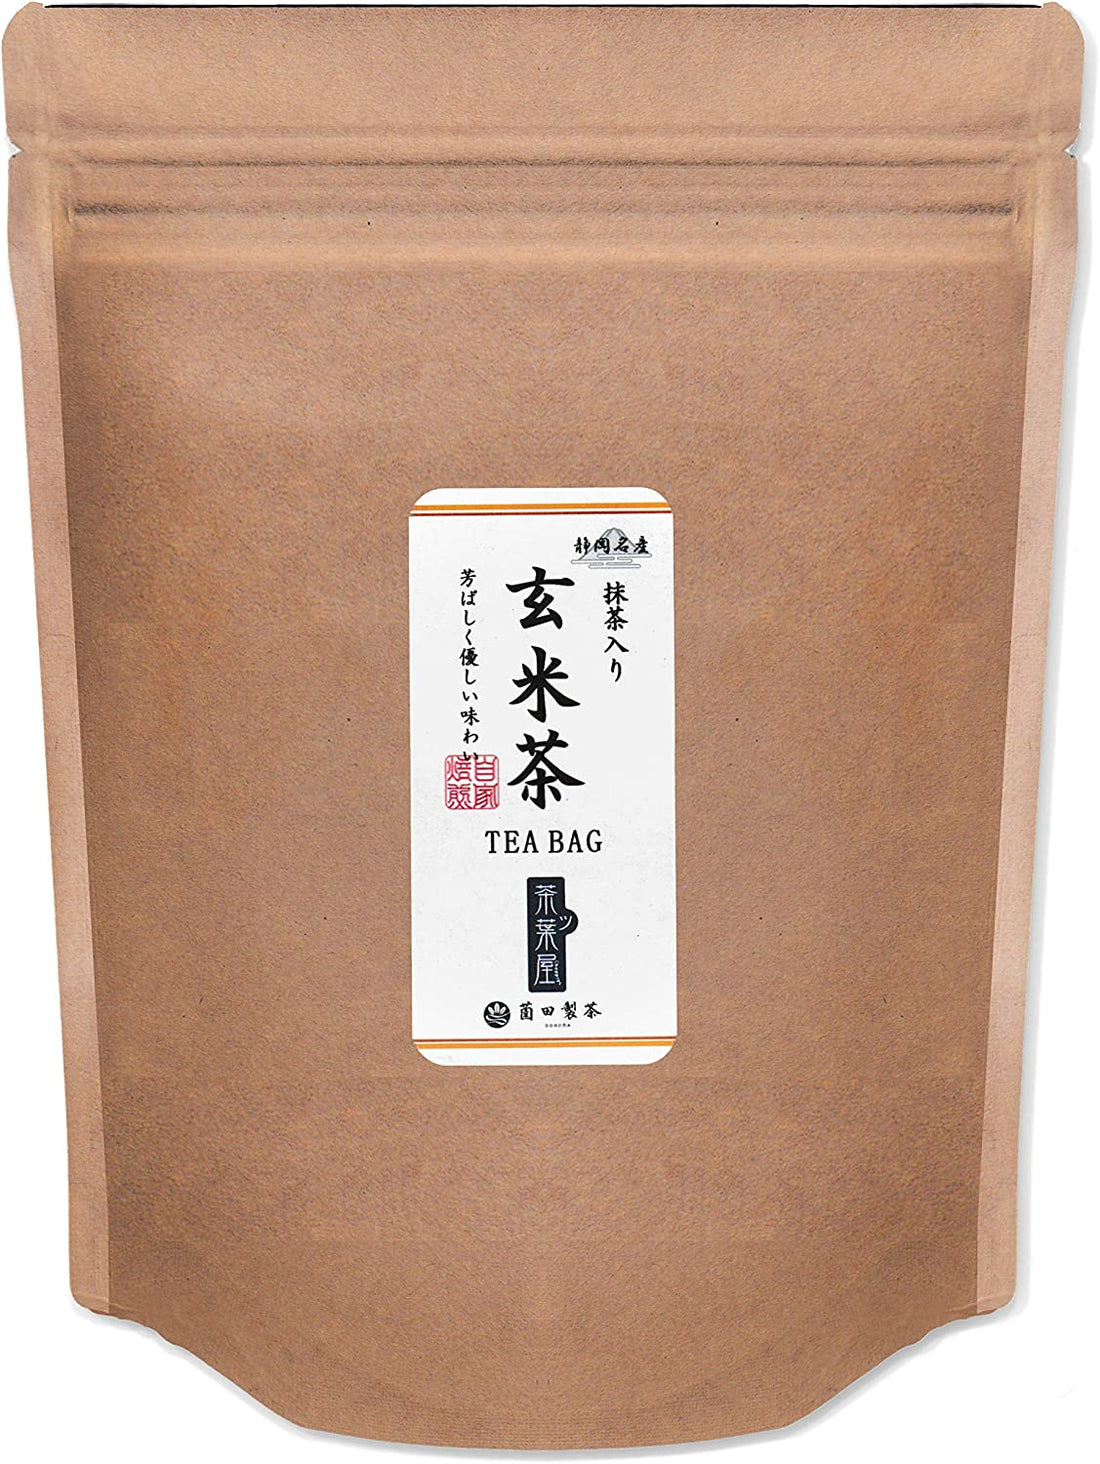 Shizuoka’s Specialty Brown Rice Green Tea (Genmaicha) bag 5g × 50 pieces by Sonoda Seisaku Co., Ltd. - NihonMura